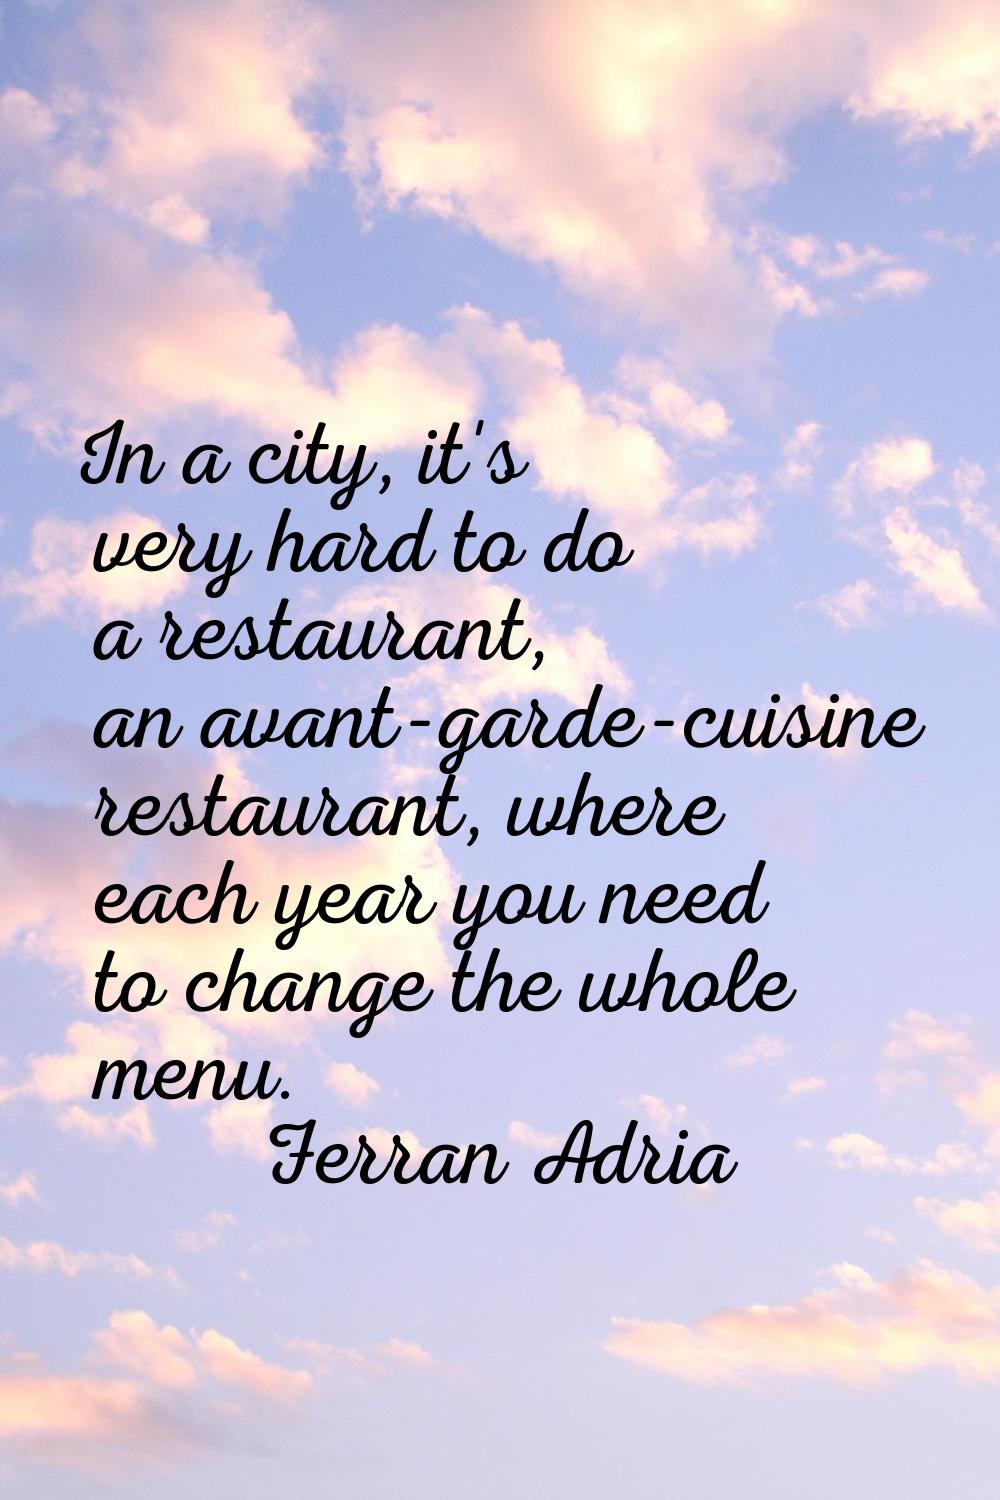 In a city, it's very hard to do a restaurant, an avant-garde-cuisine restaurant, where each year yo